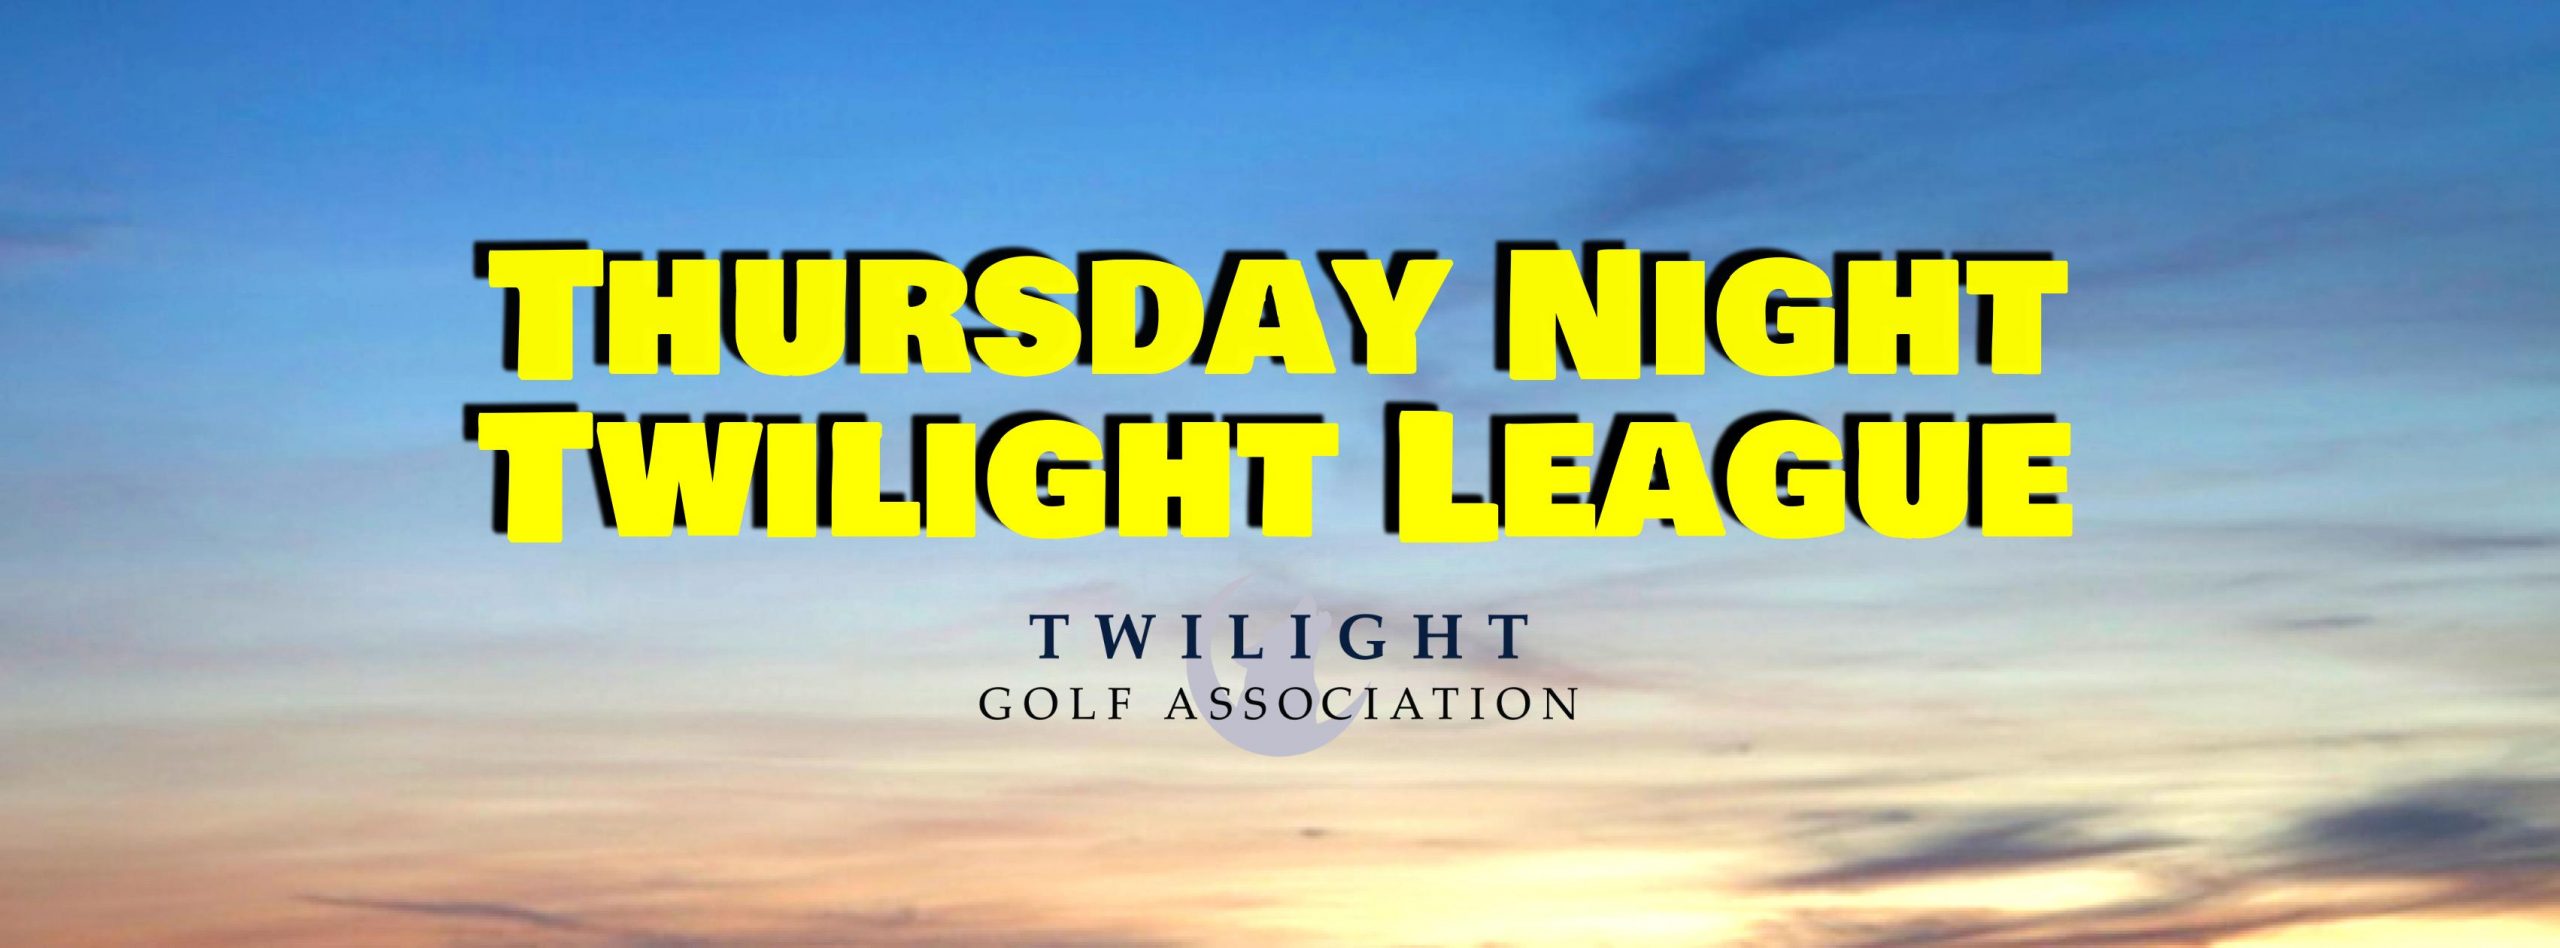 Thursday Night Twilight League at Stumpy Lake Golf Course